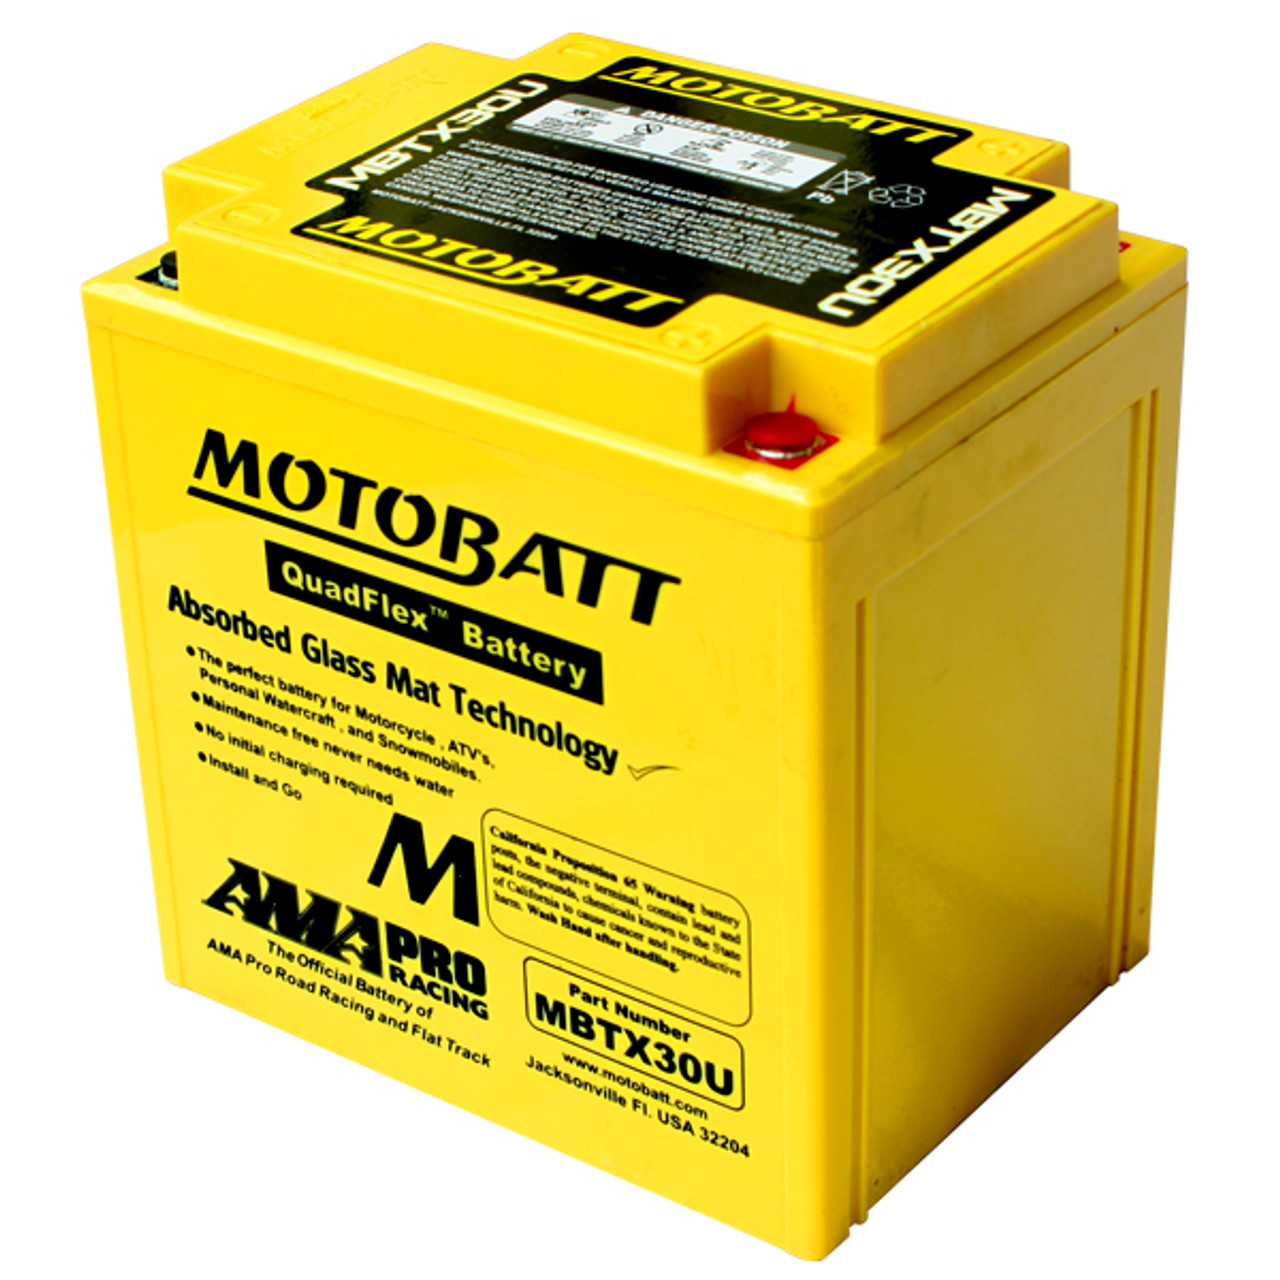 Motobatt MBTX30U Battery - AGM Sealed for Motorcycle - Powersport